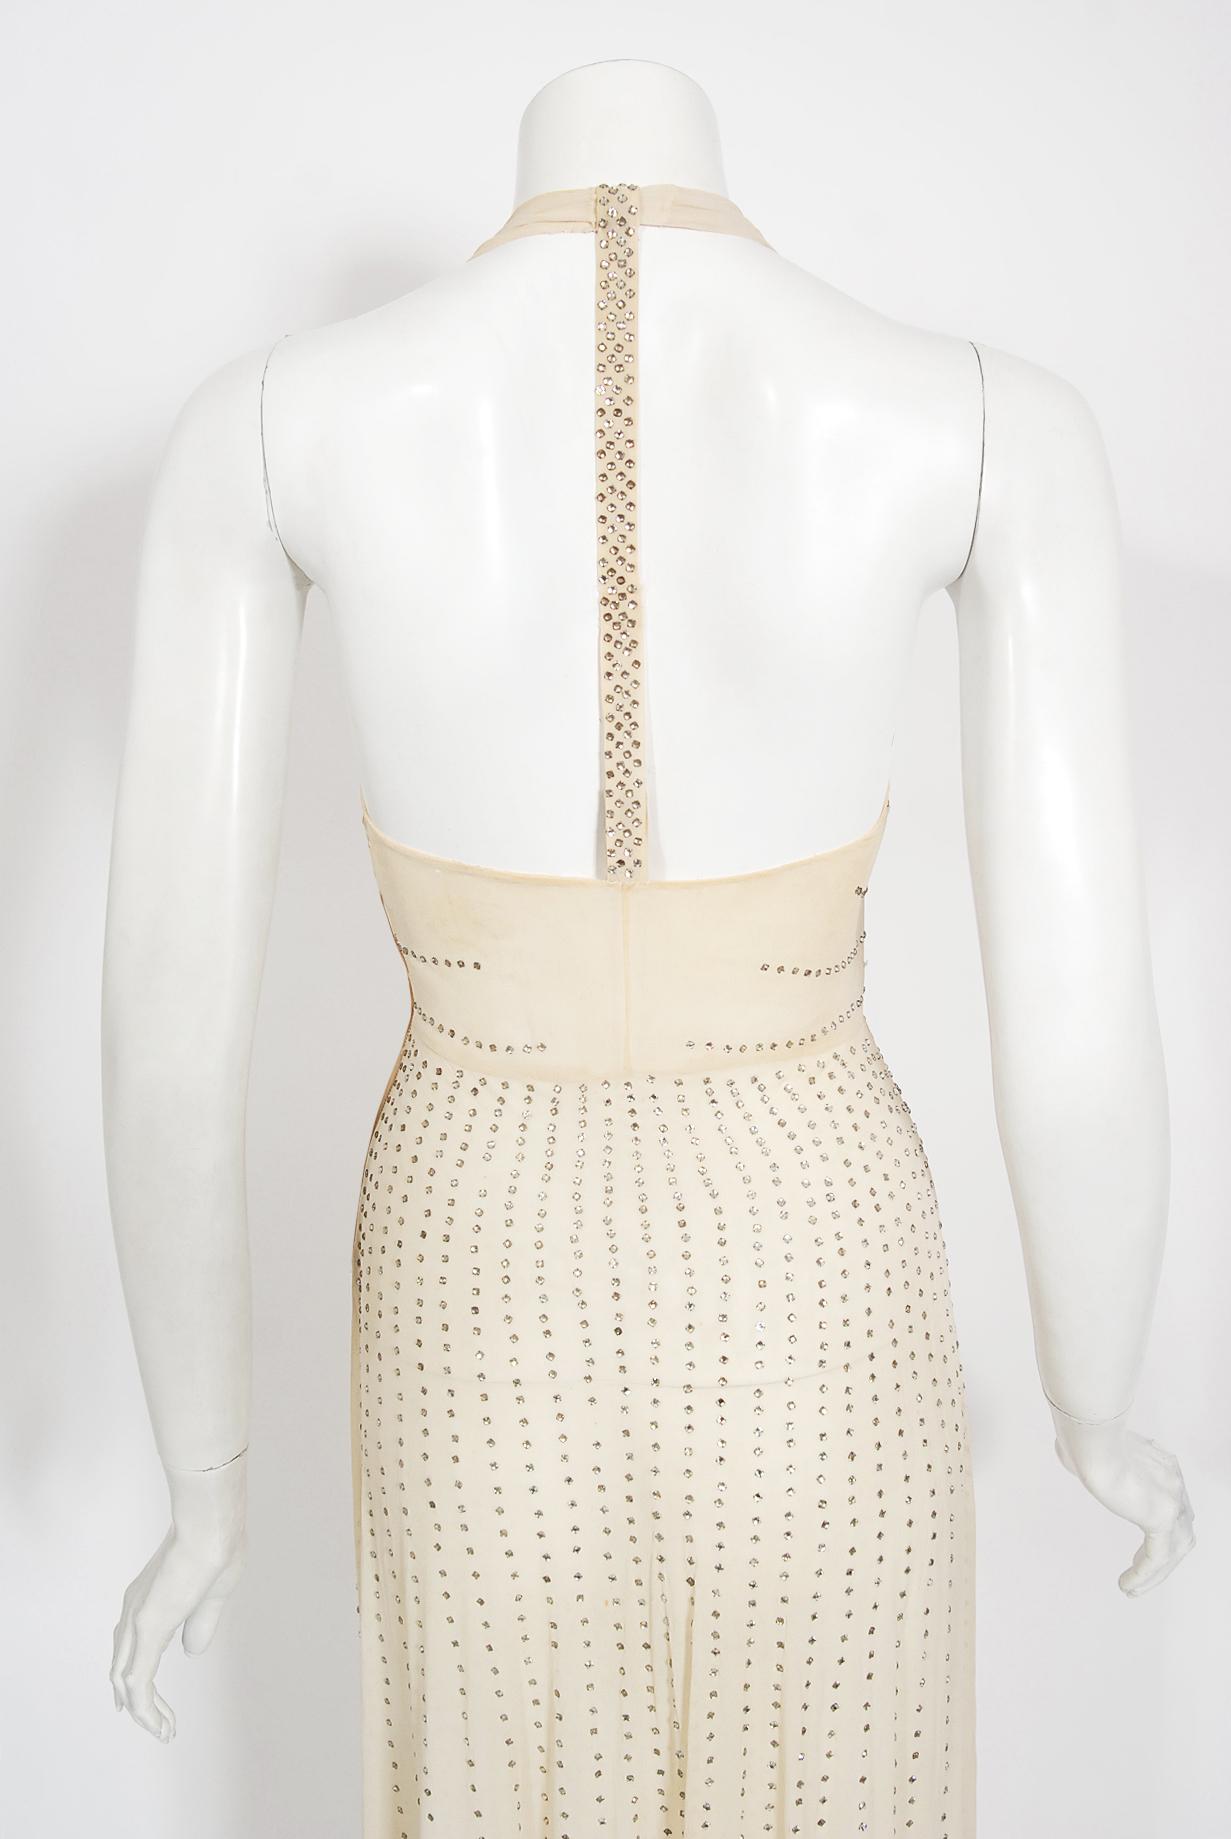 Vintage 1930's Rhinestone Studded Sheer Ivory Chiffon Bias-Cut Halter Dress Gown 6